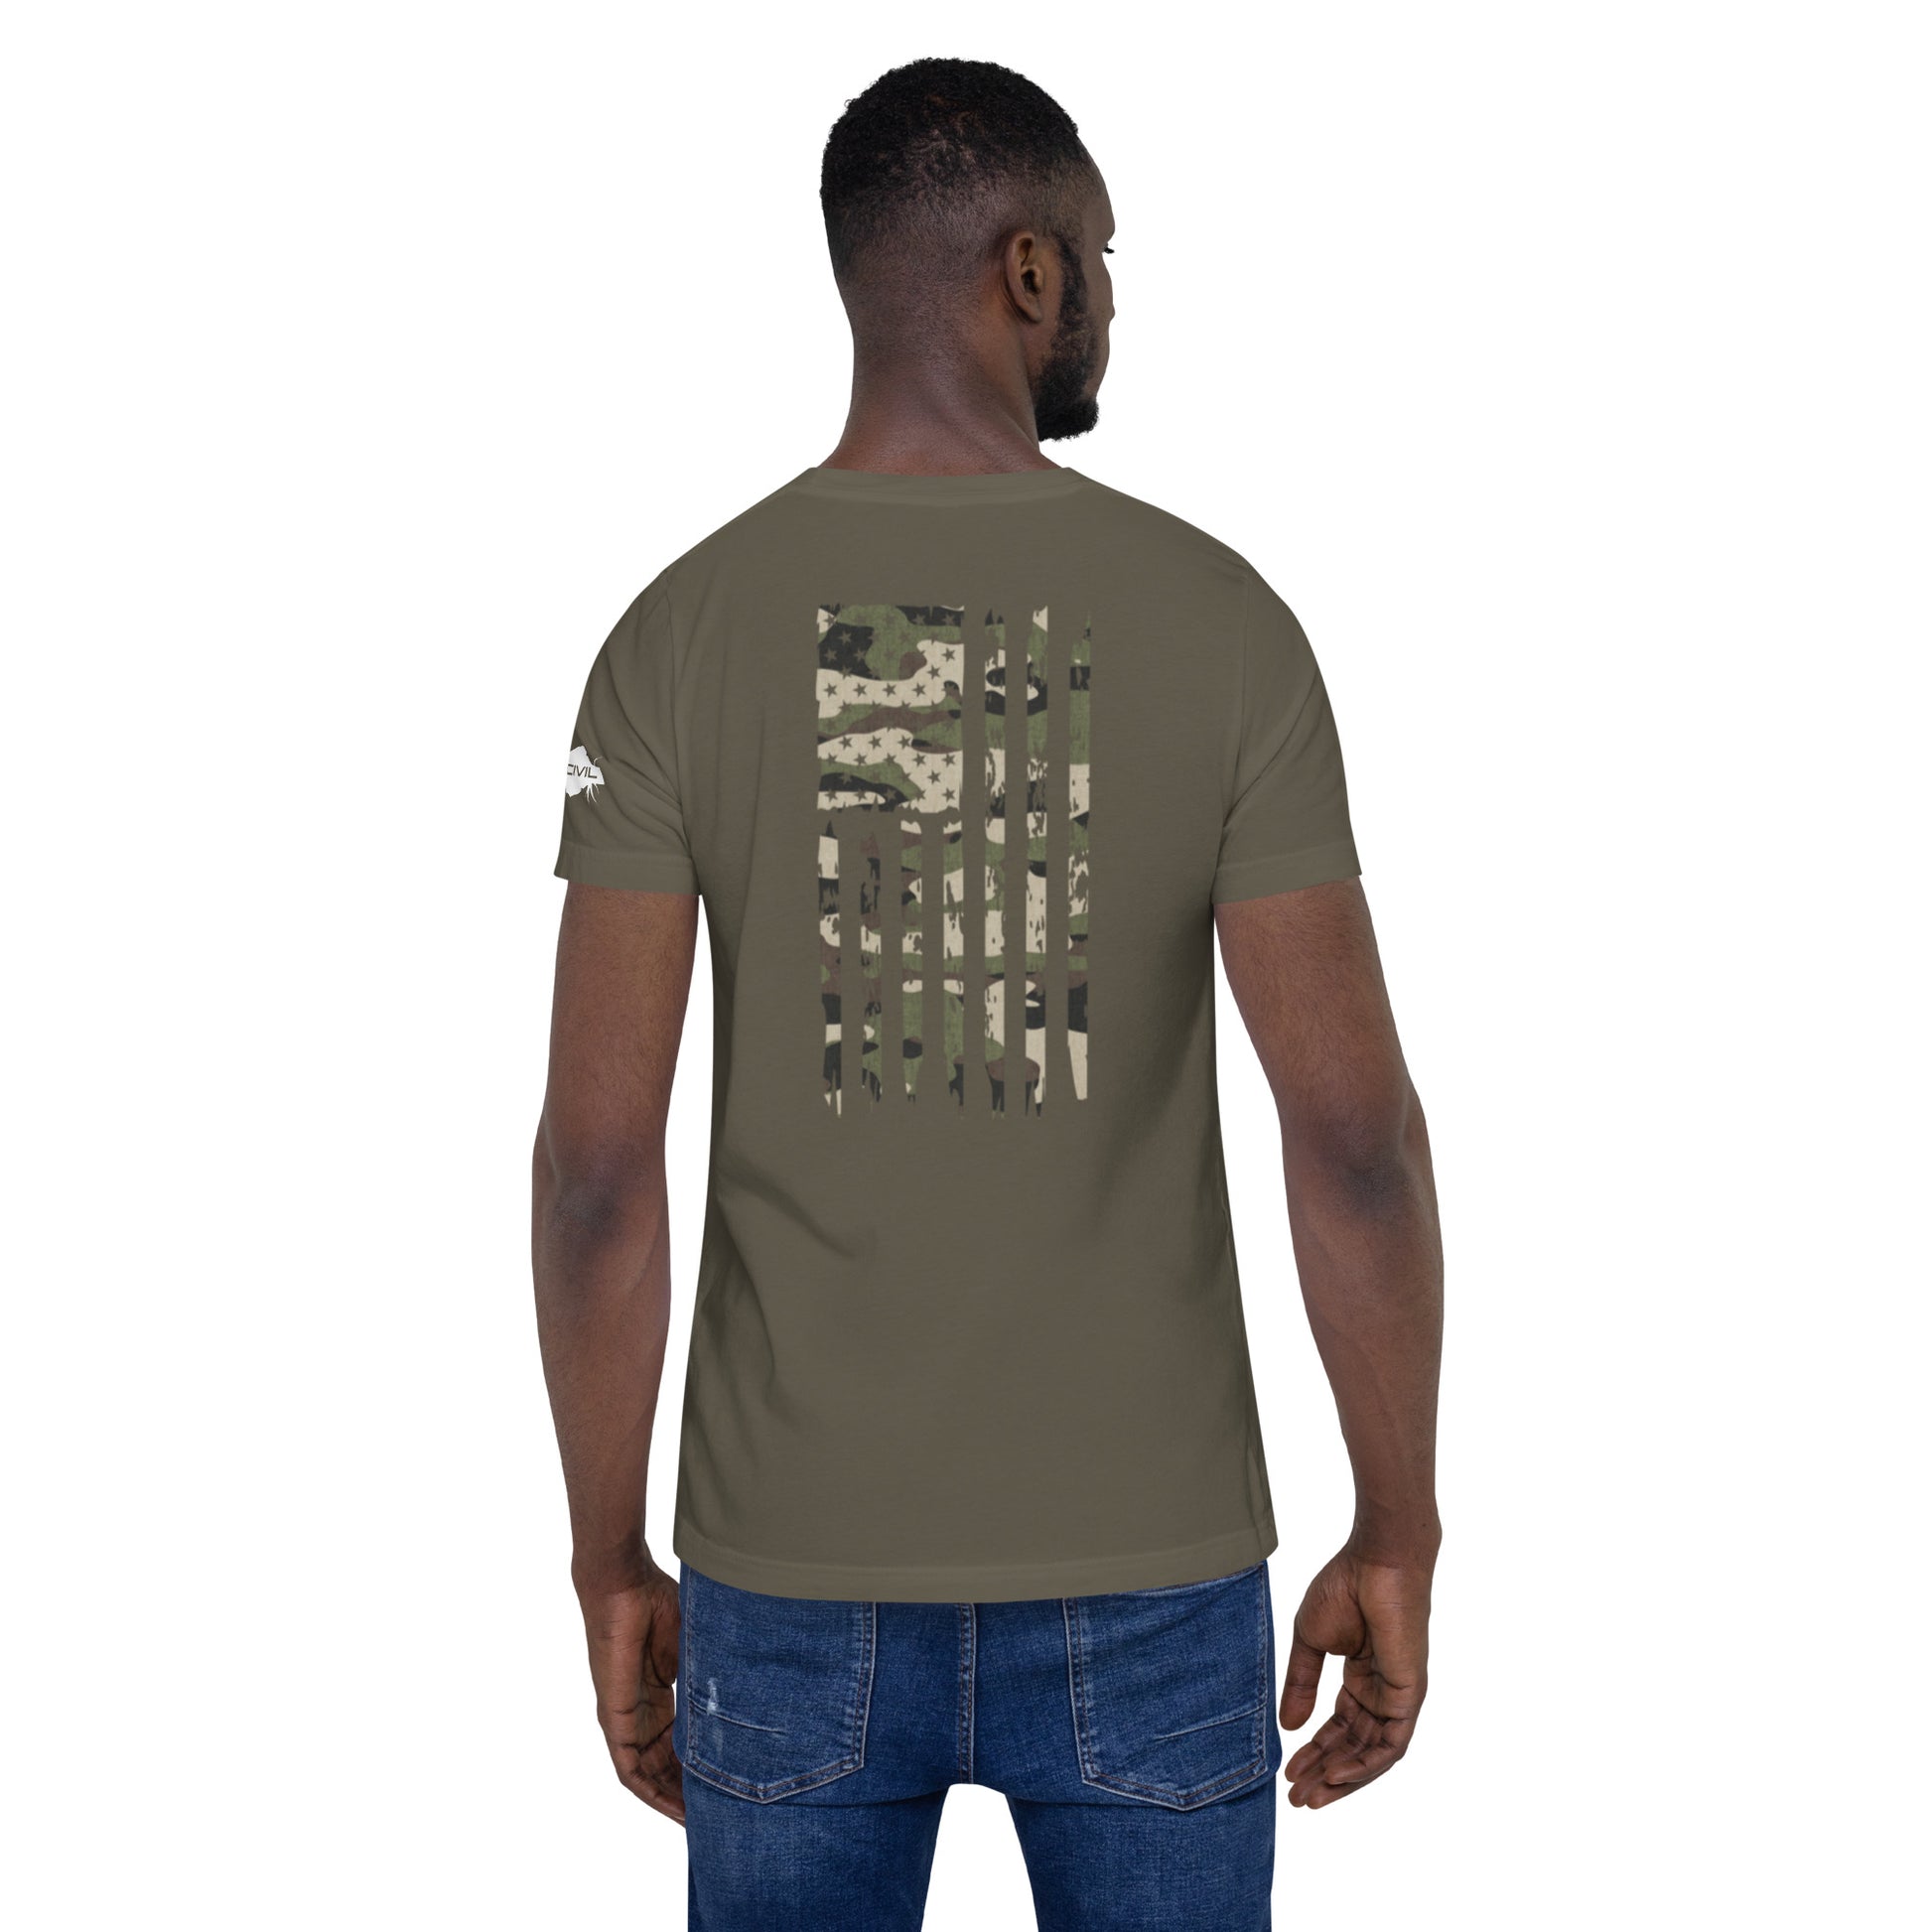 Unisex Army Green Camo distressed American Flag t-shirt